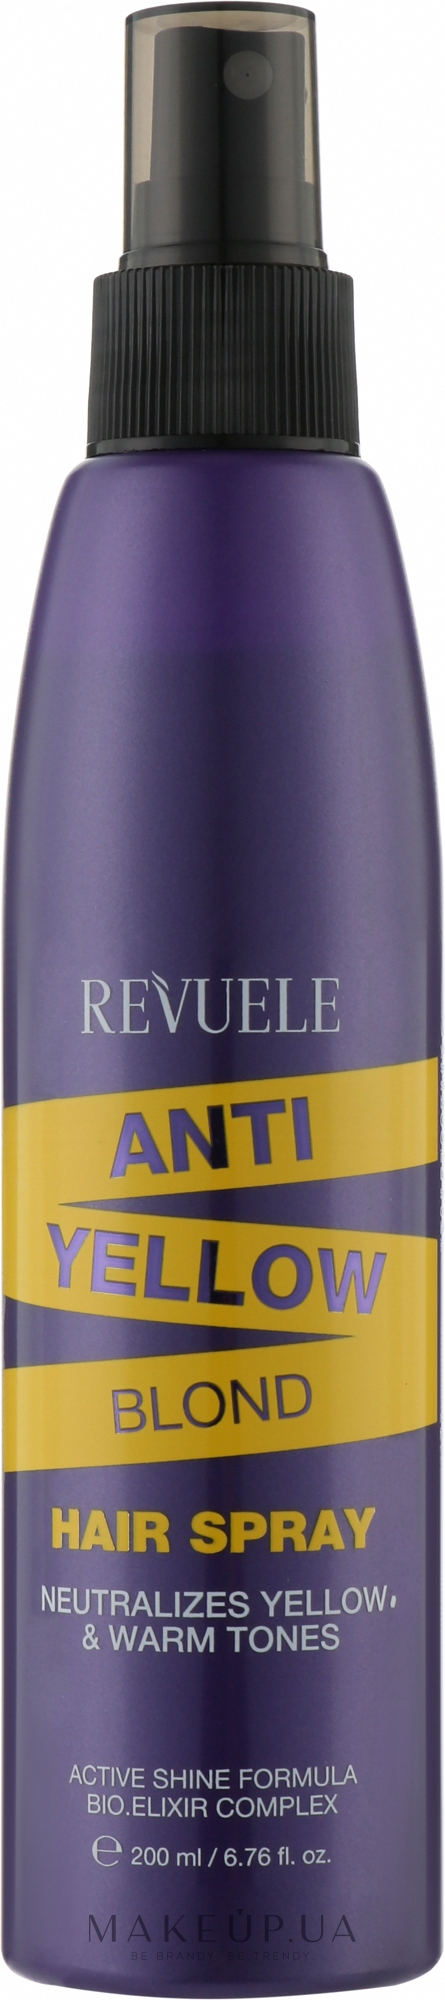 Спрей для волос с антижелтым эффектом - Revuele Anti Yellow Blond Hair Spray — фото 200ml